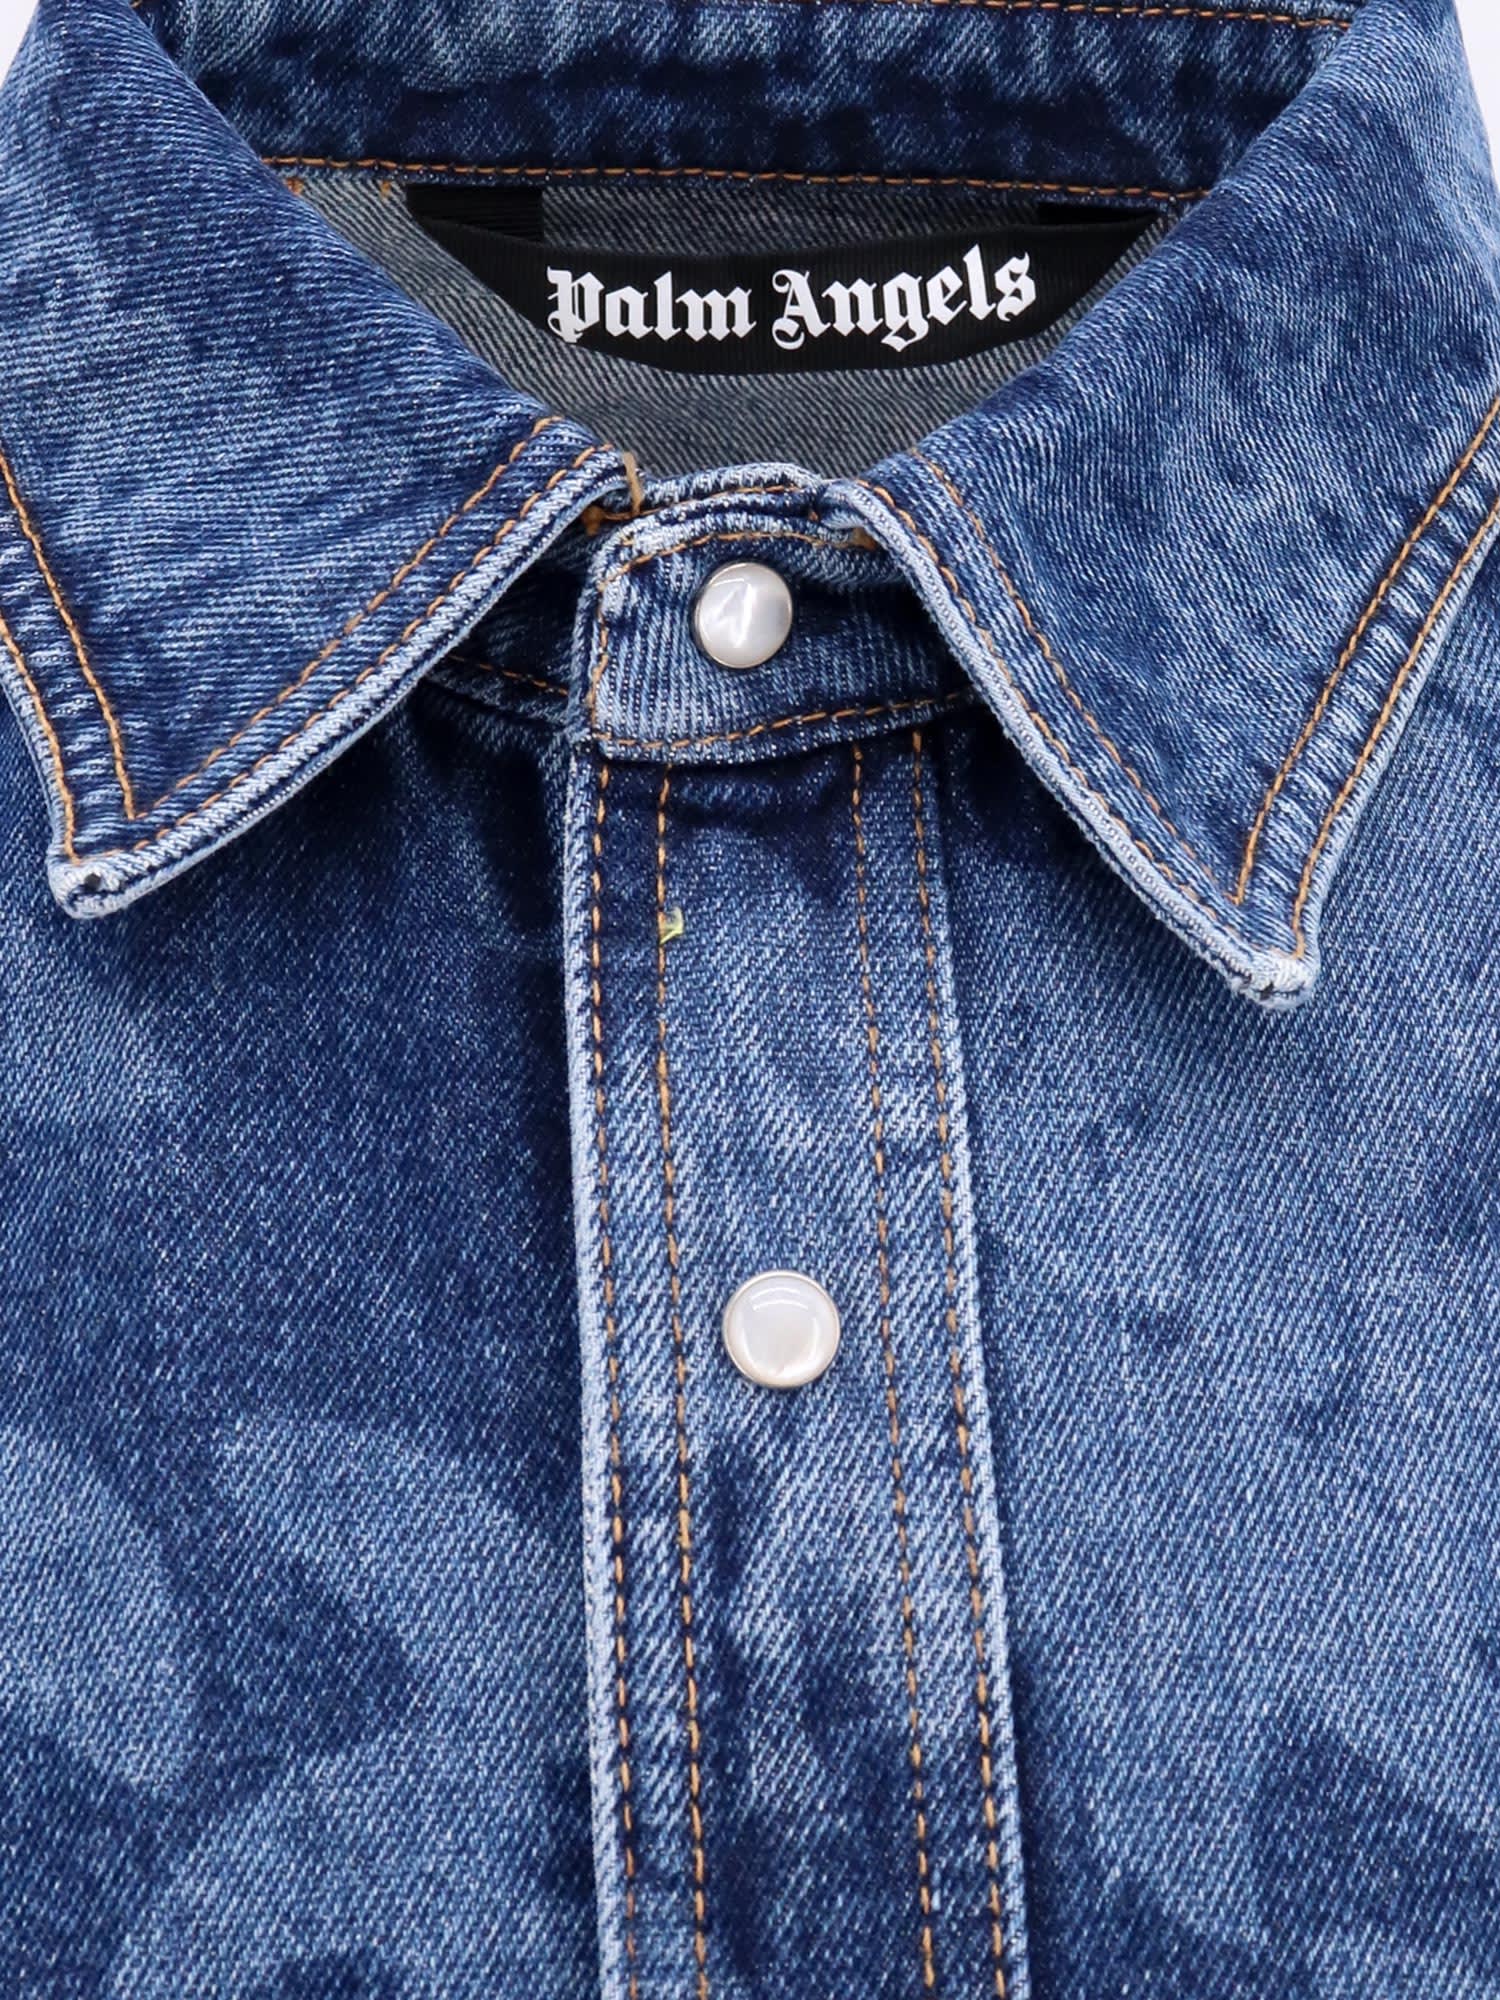 Palm Angels Light Blue Cotton Denim Shirt - S